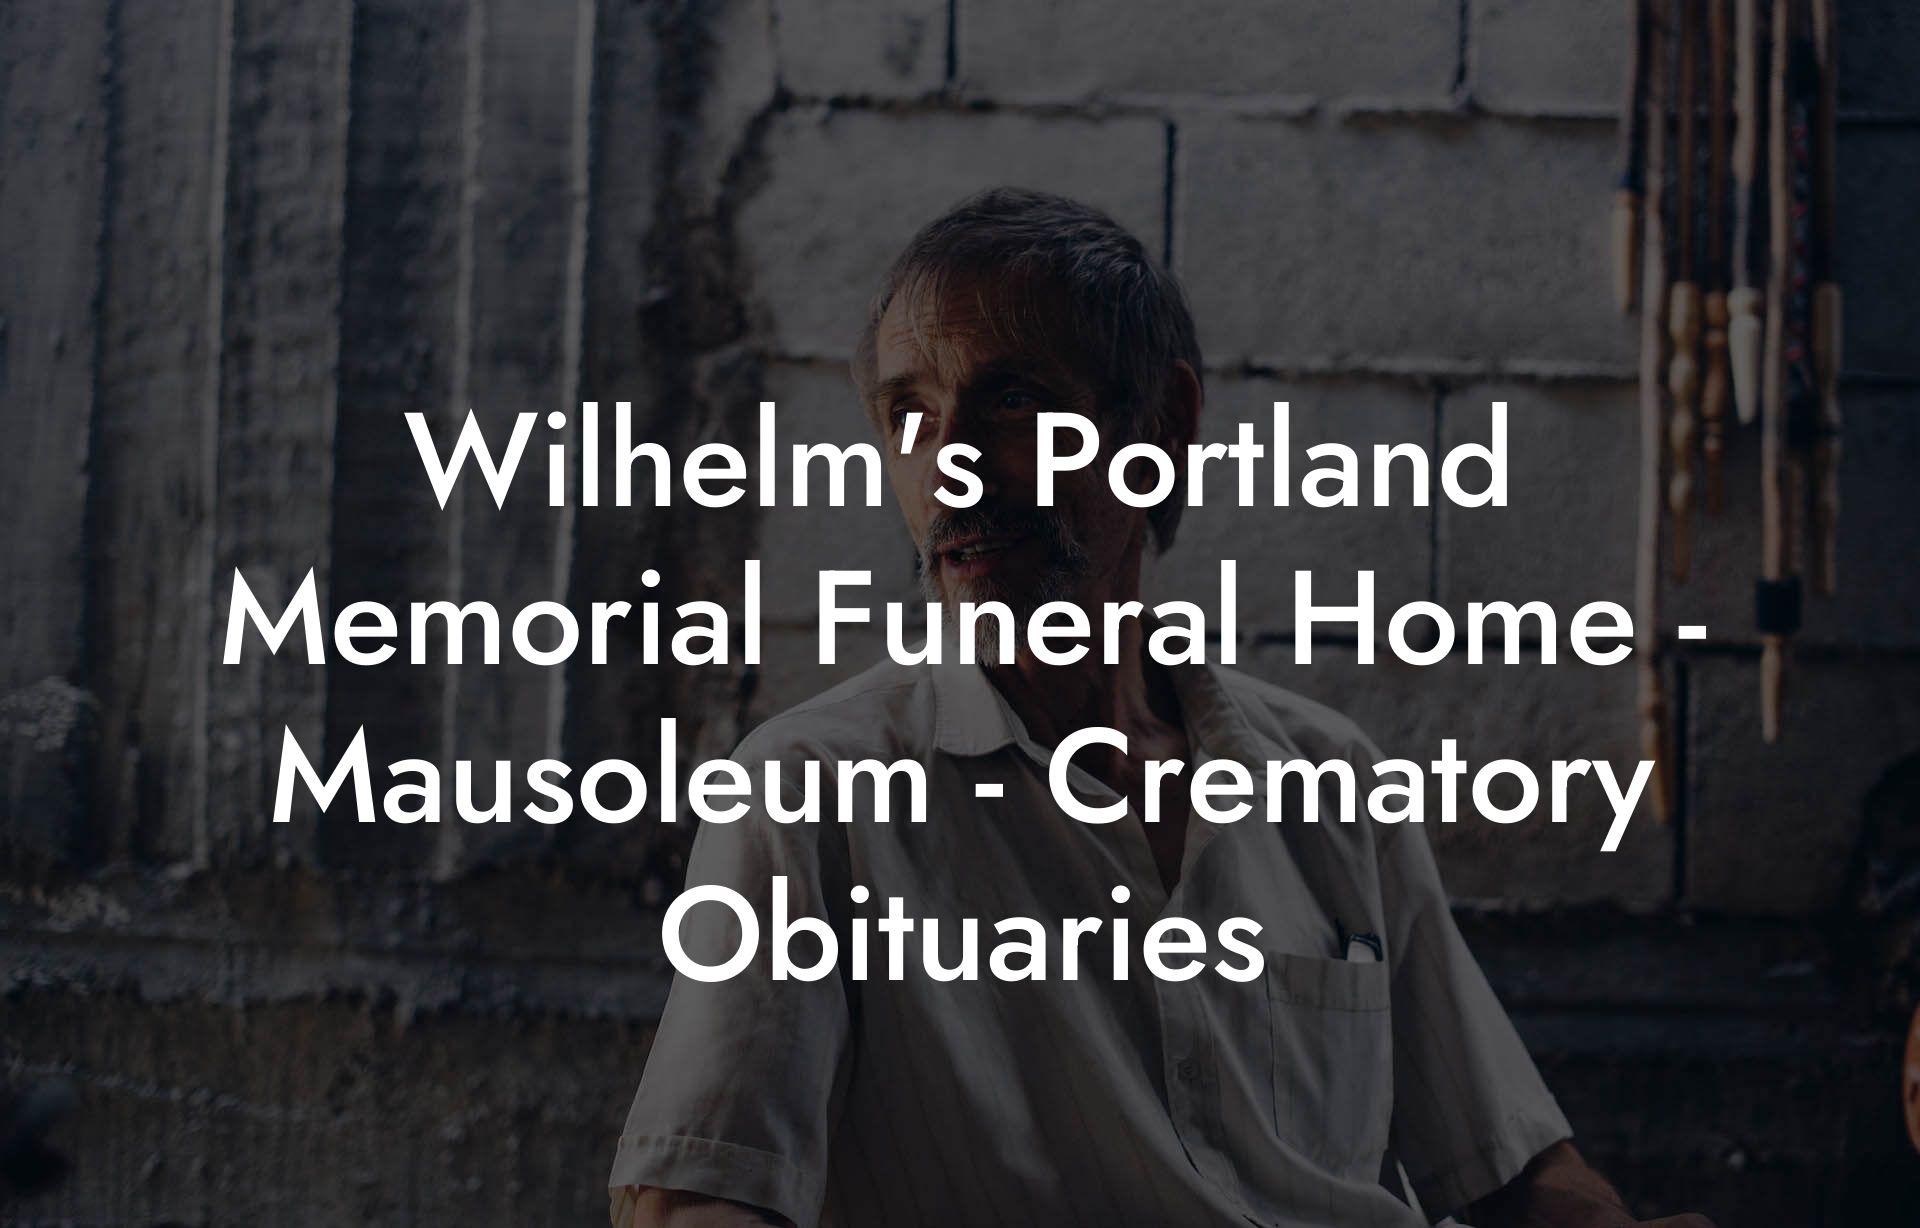 Wilhelm's Portland Memorial Funeral Home - Mausoleum - Crematory Obituaries